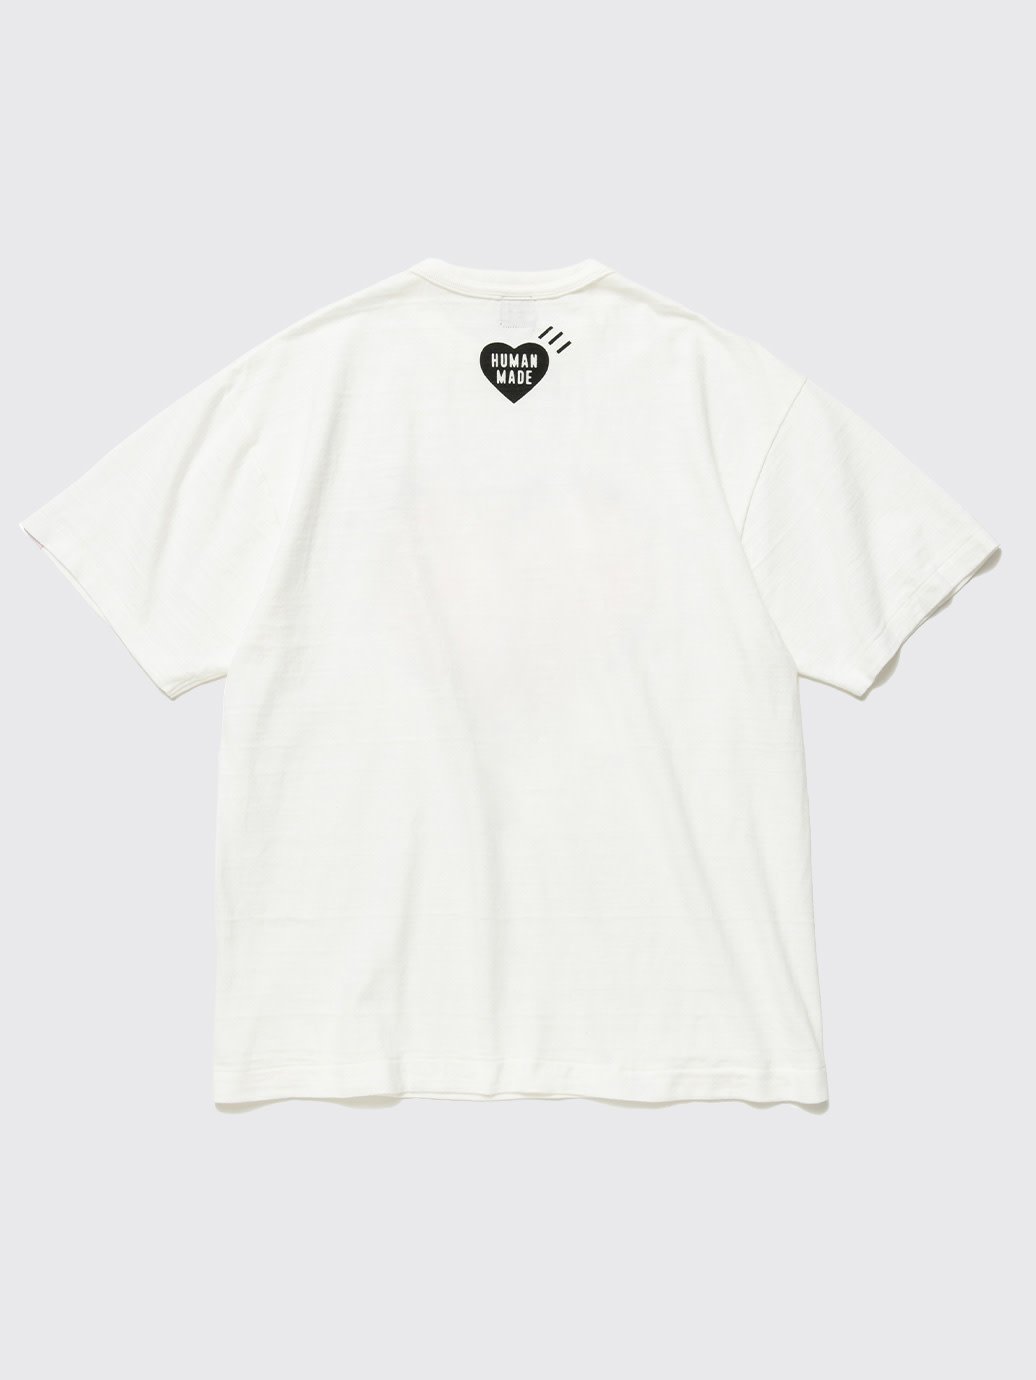 Human Made Heart Pocket T-Shirt White